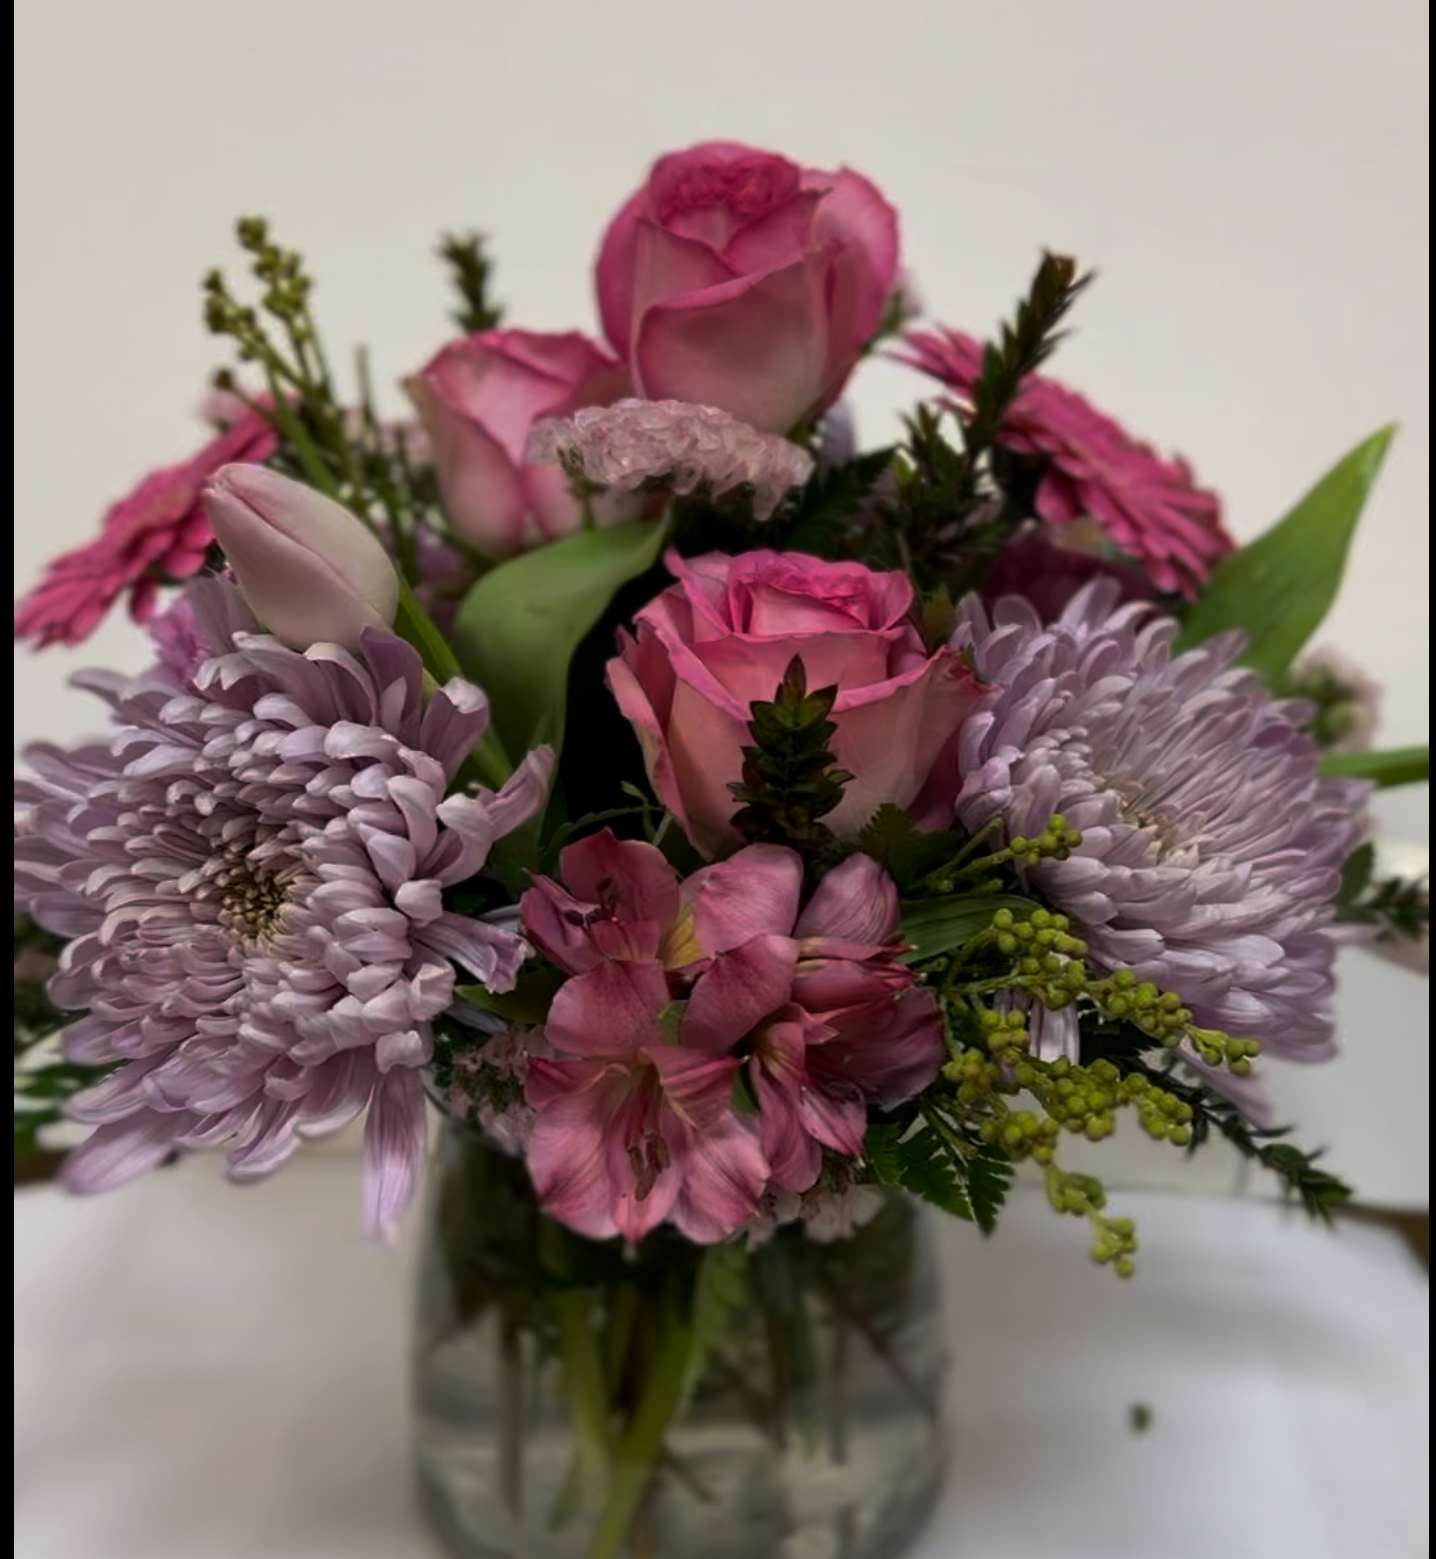 Maggie’s Favorite - Seasonal fresh florals , vased in shades of pinks and lavenders